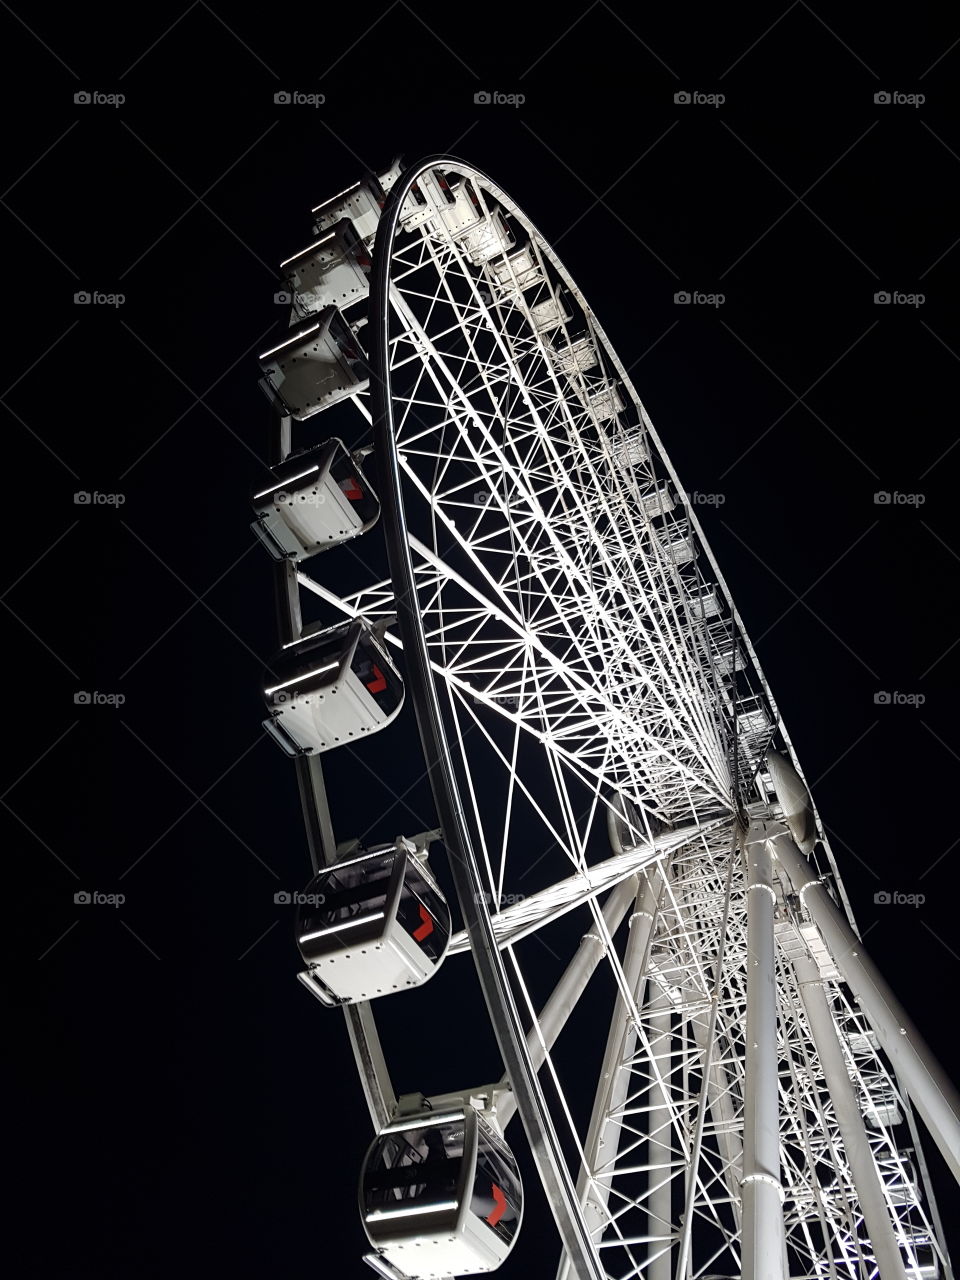 Brisbane wheel by night